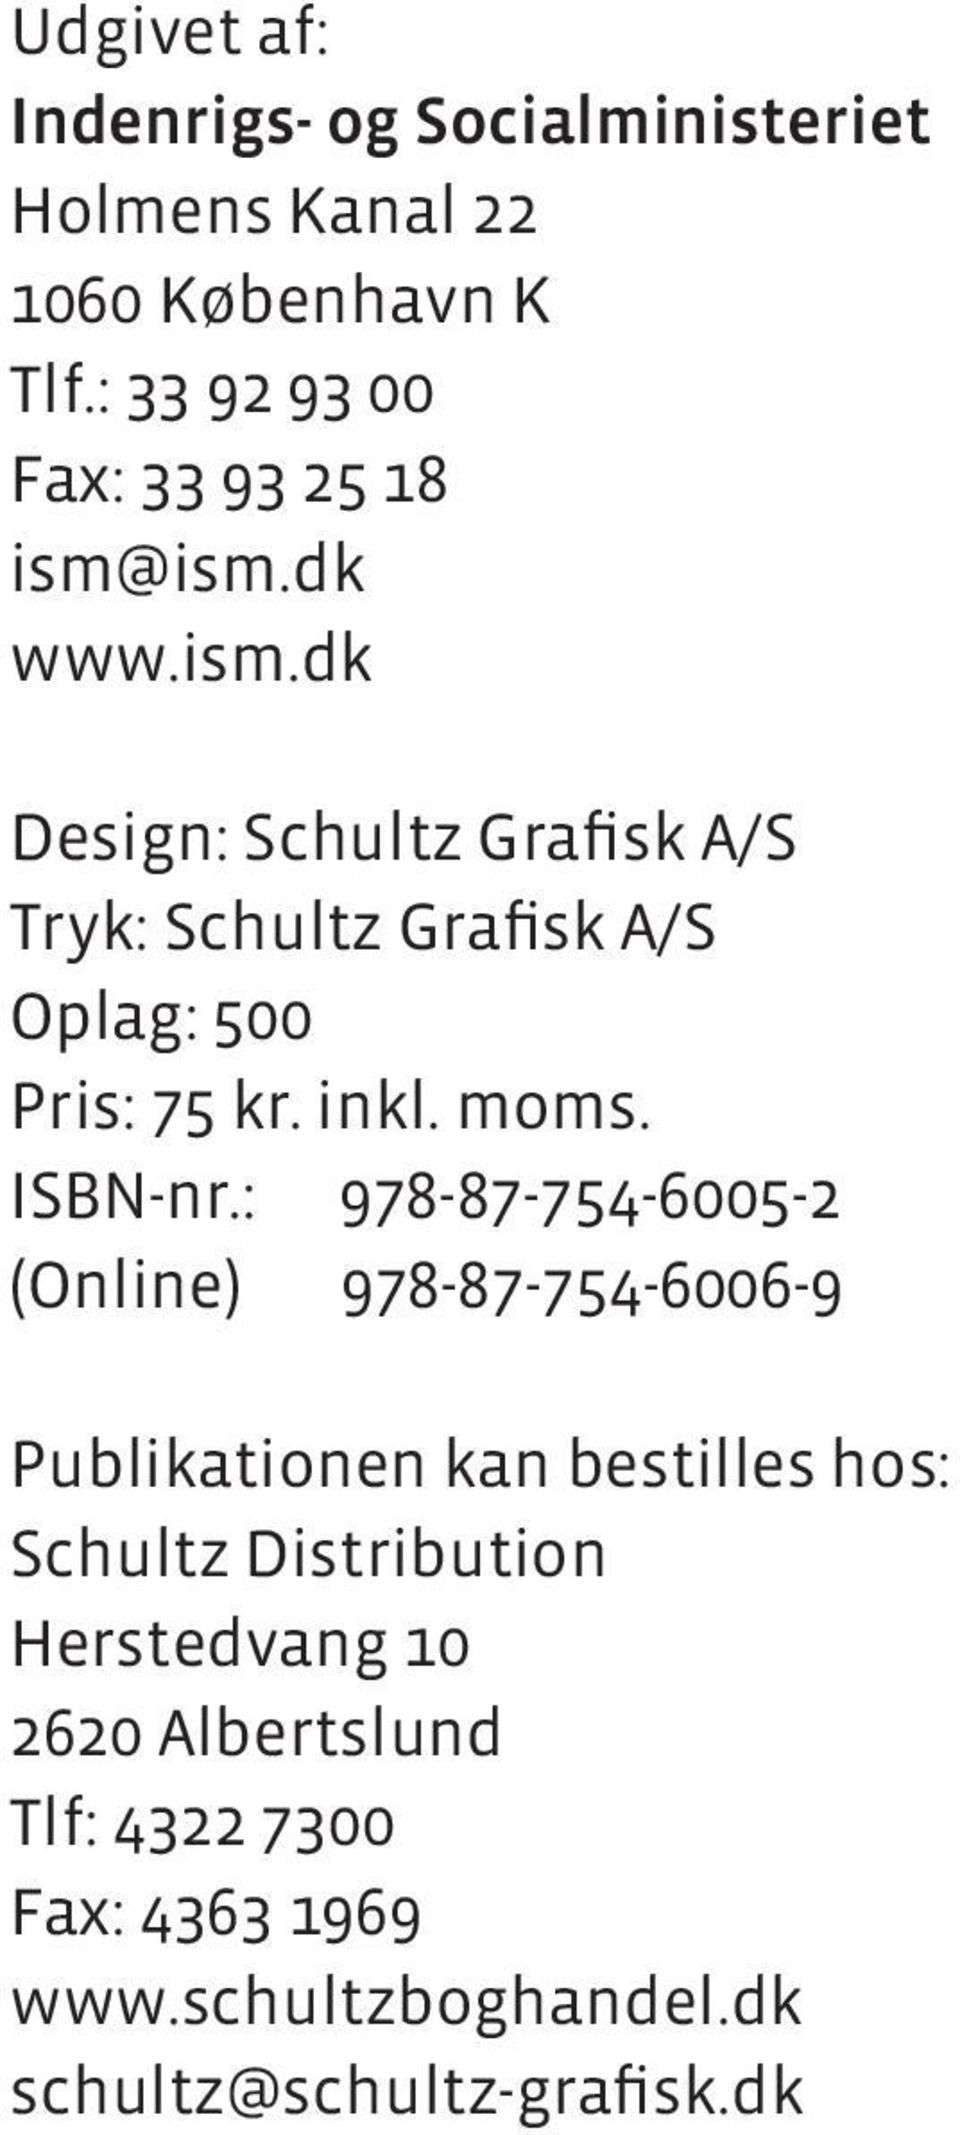 ism.dk www.ism.dk Design: Schultz Grafisk A/S Tryk: Schultz Grafisk A/S Oplag: 500 Pris: 75 kr. inkl. moms.